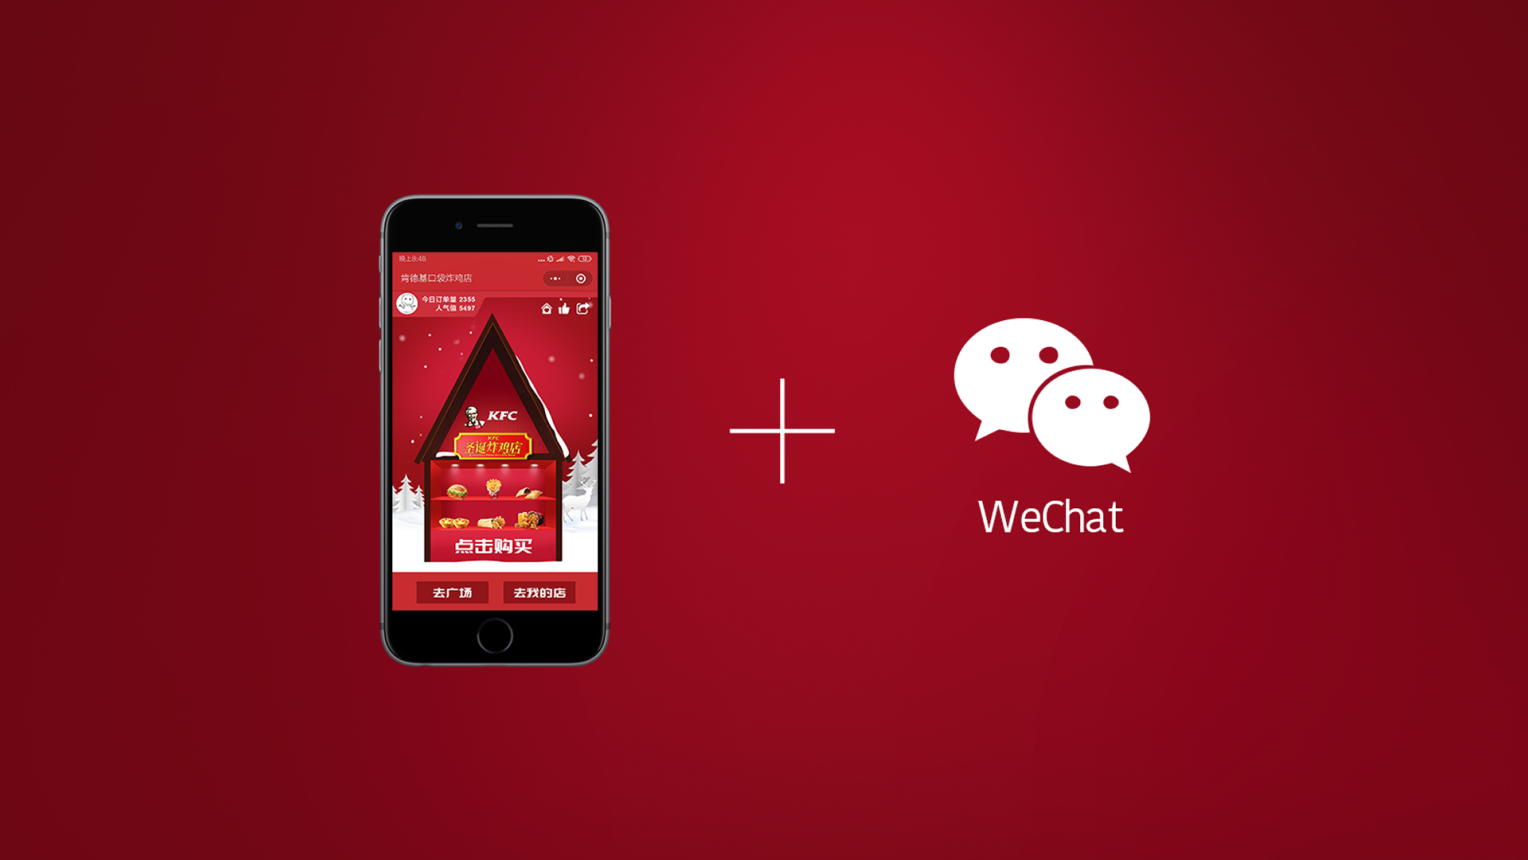 KFC Pocket store imagery plus the WeChat logo